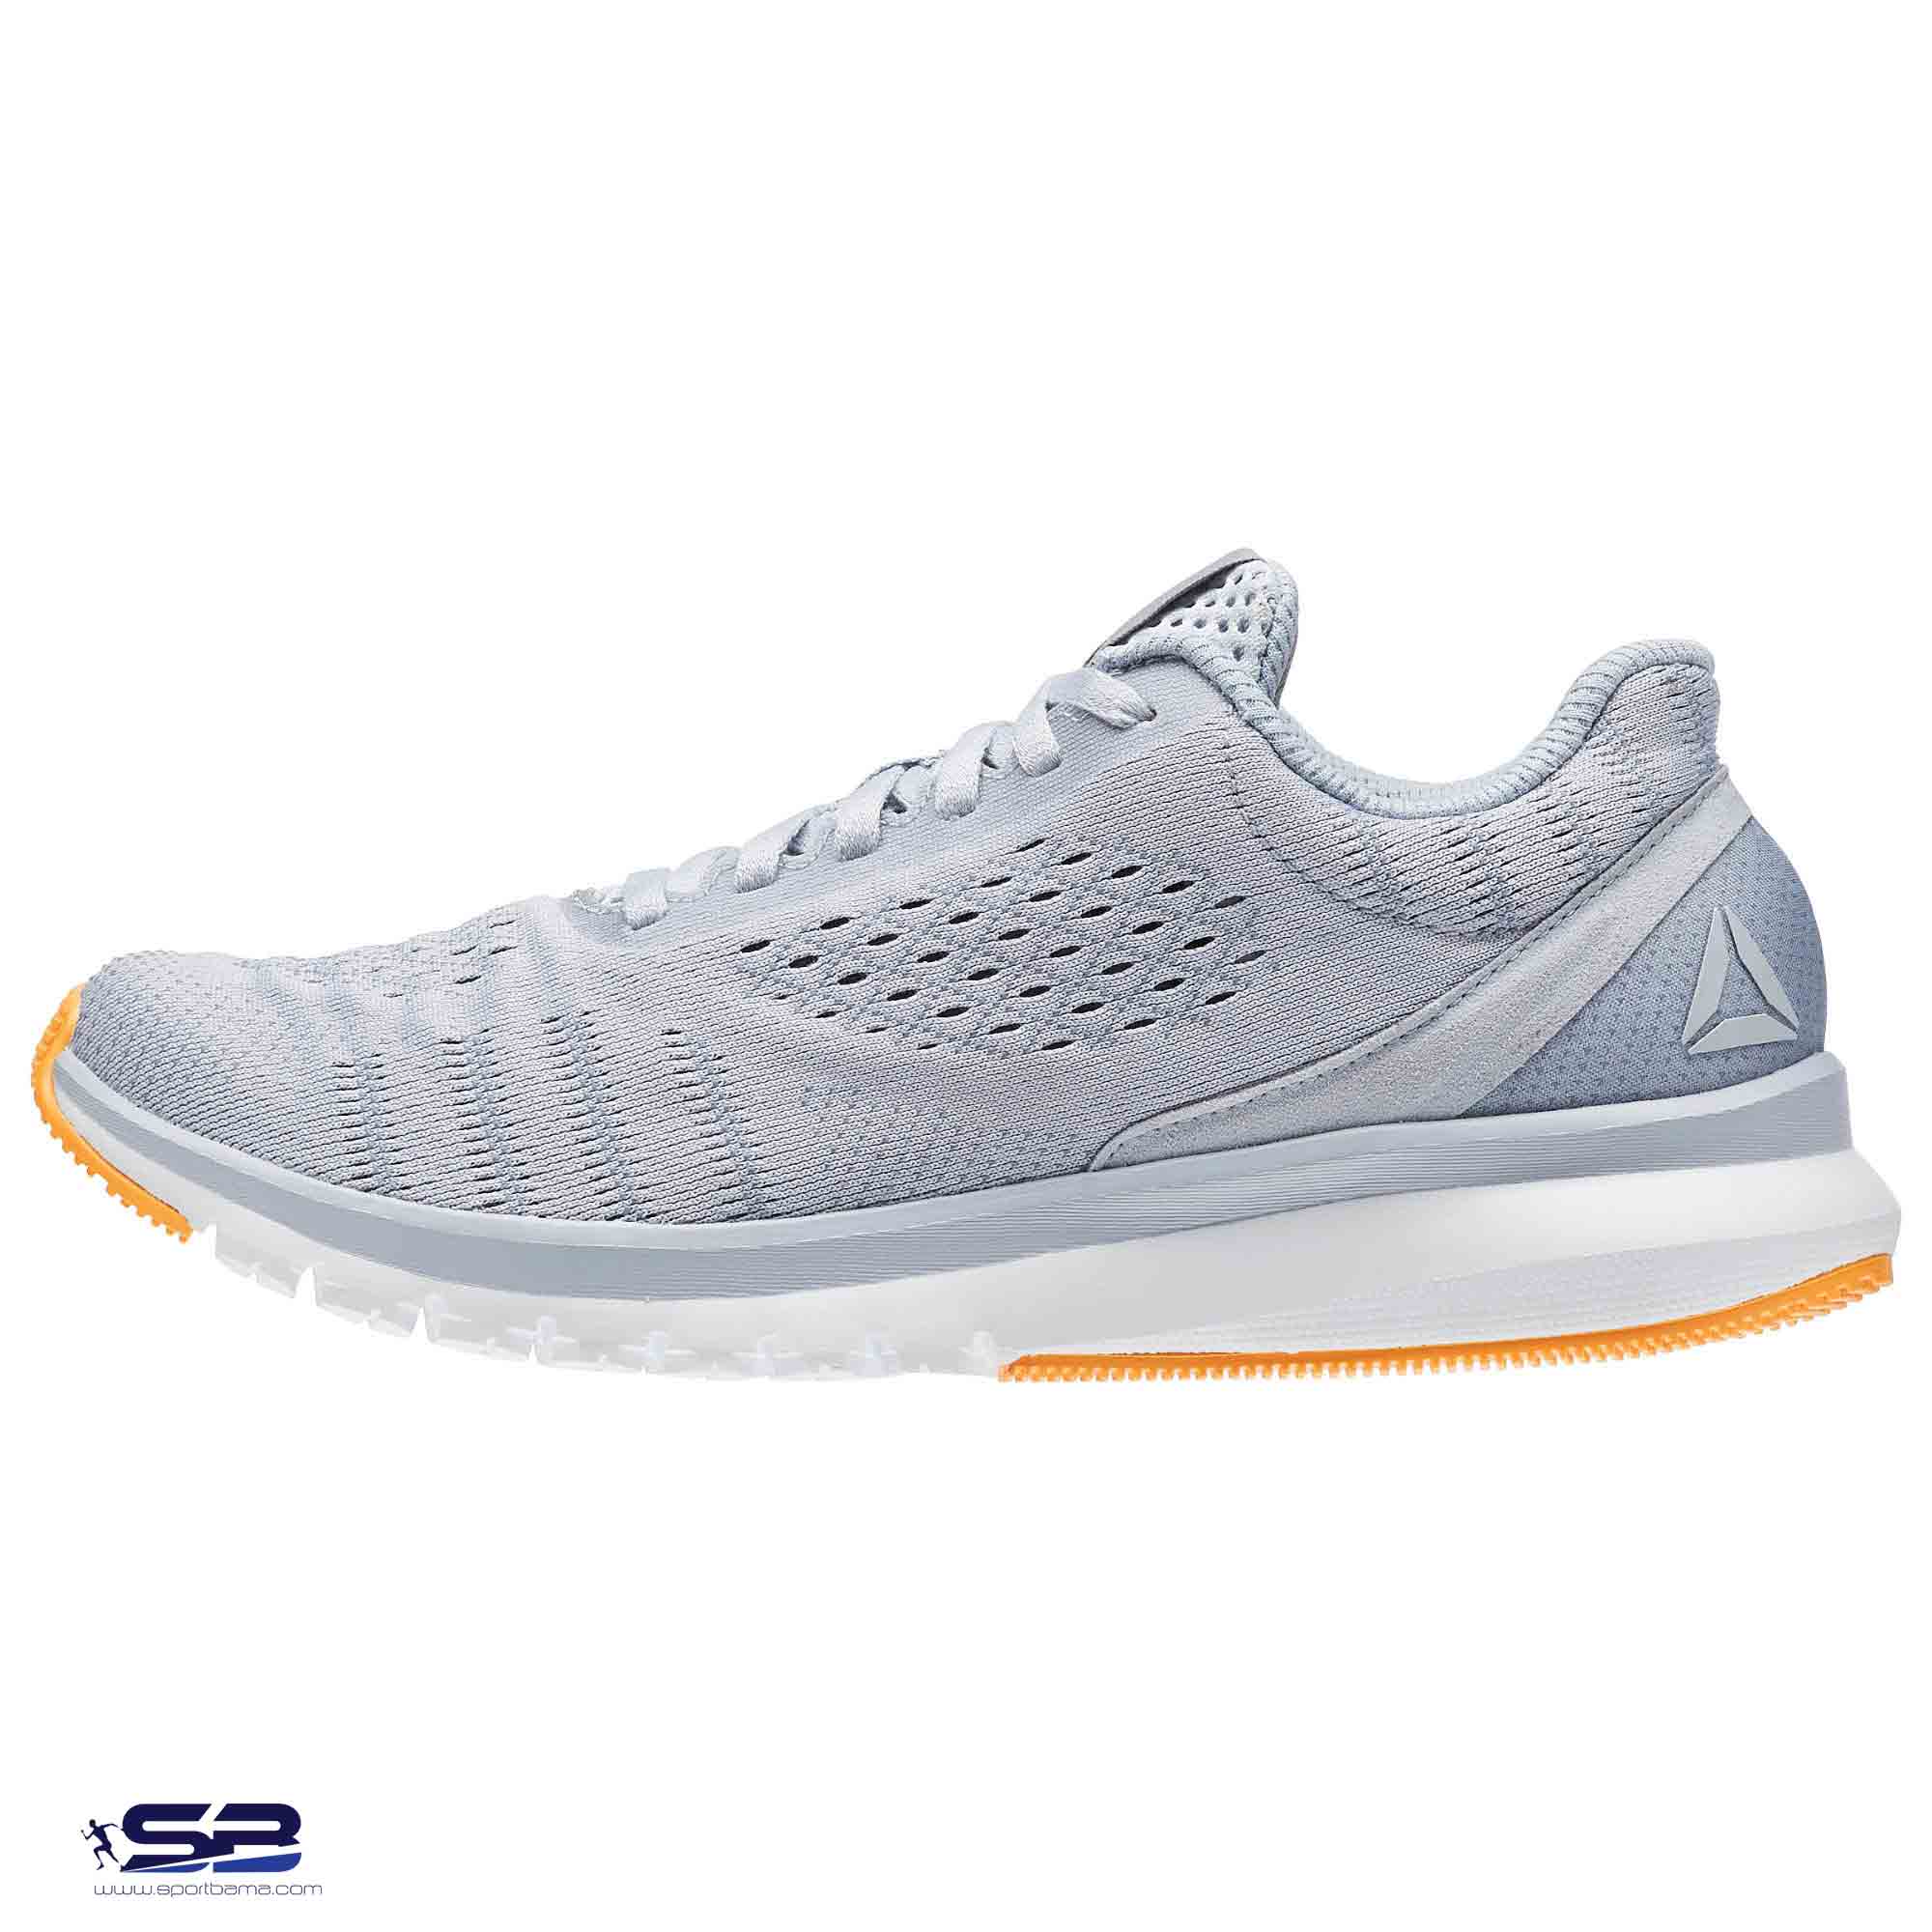  خرید  کفش کتانی اورجینال ریباک     Reebok Running Shoes BS5277  